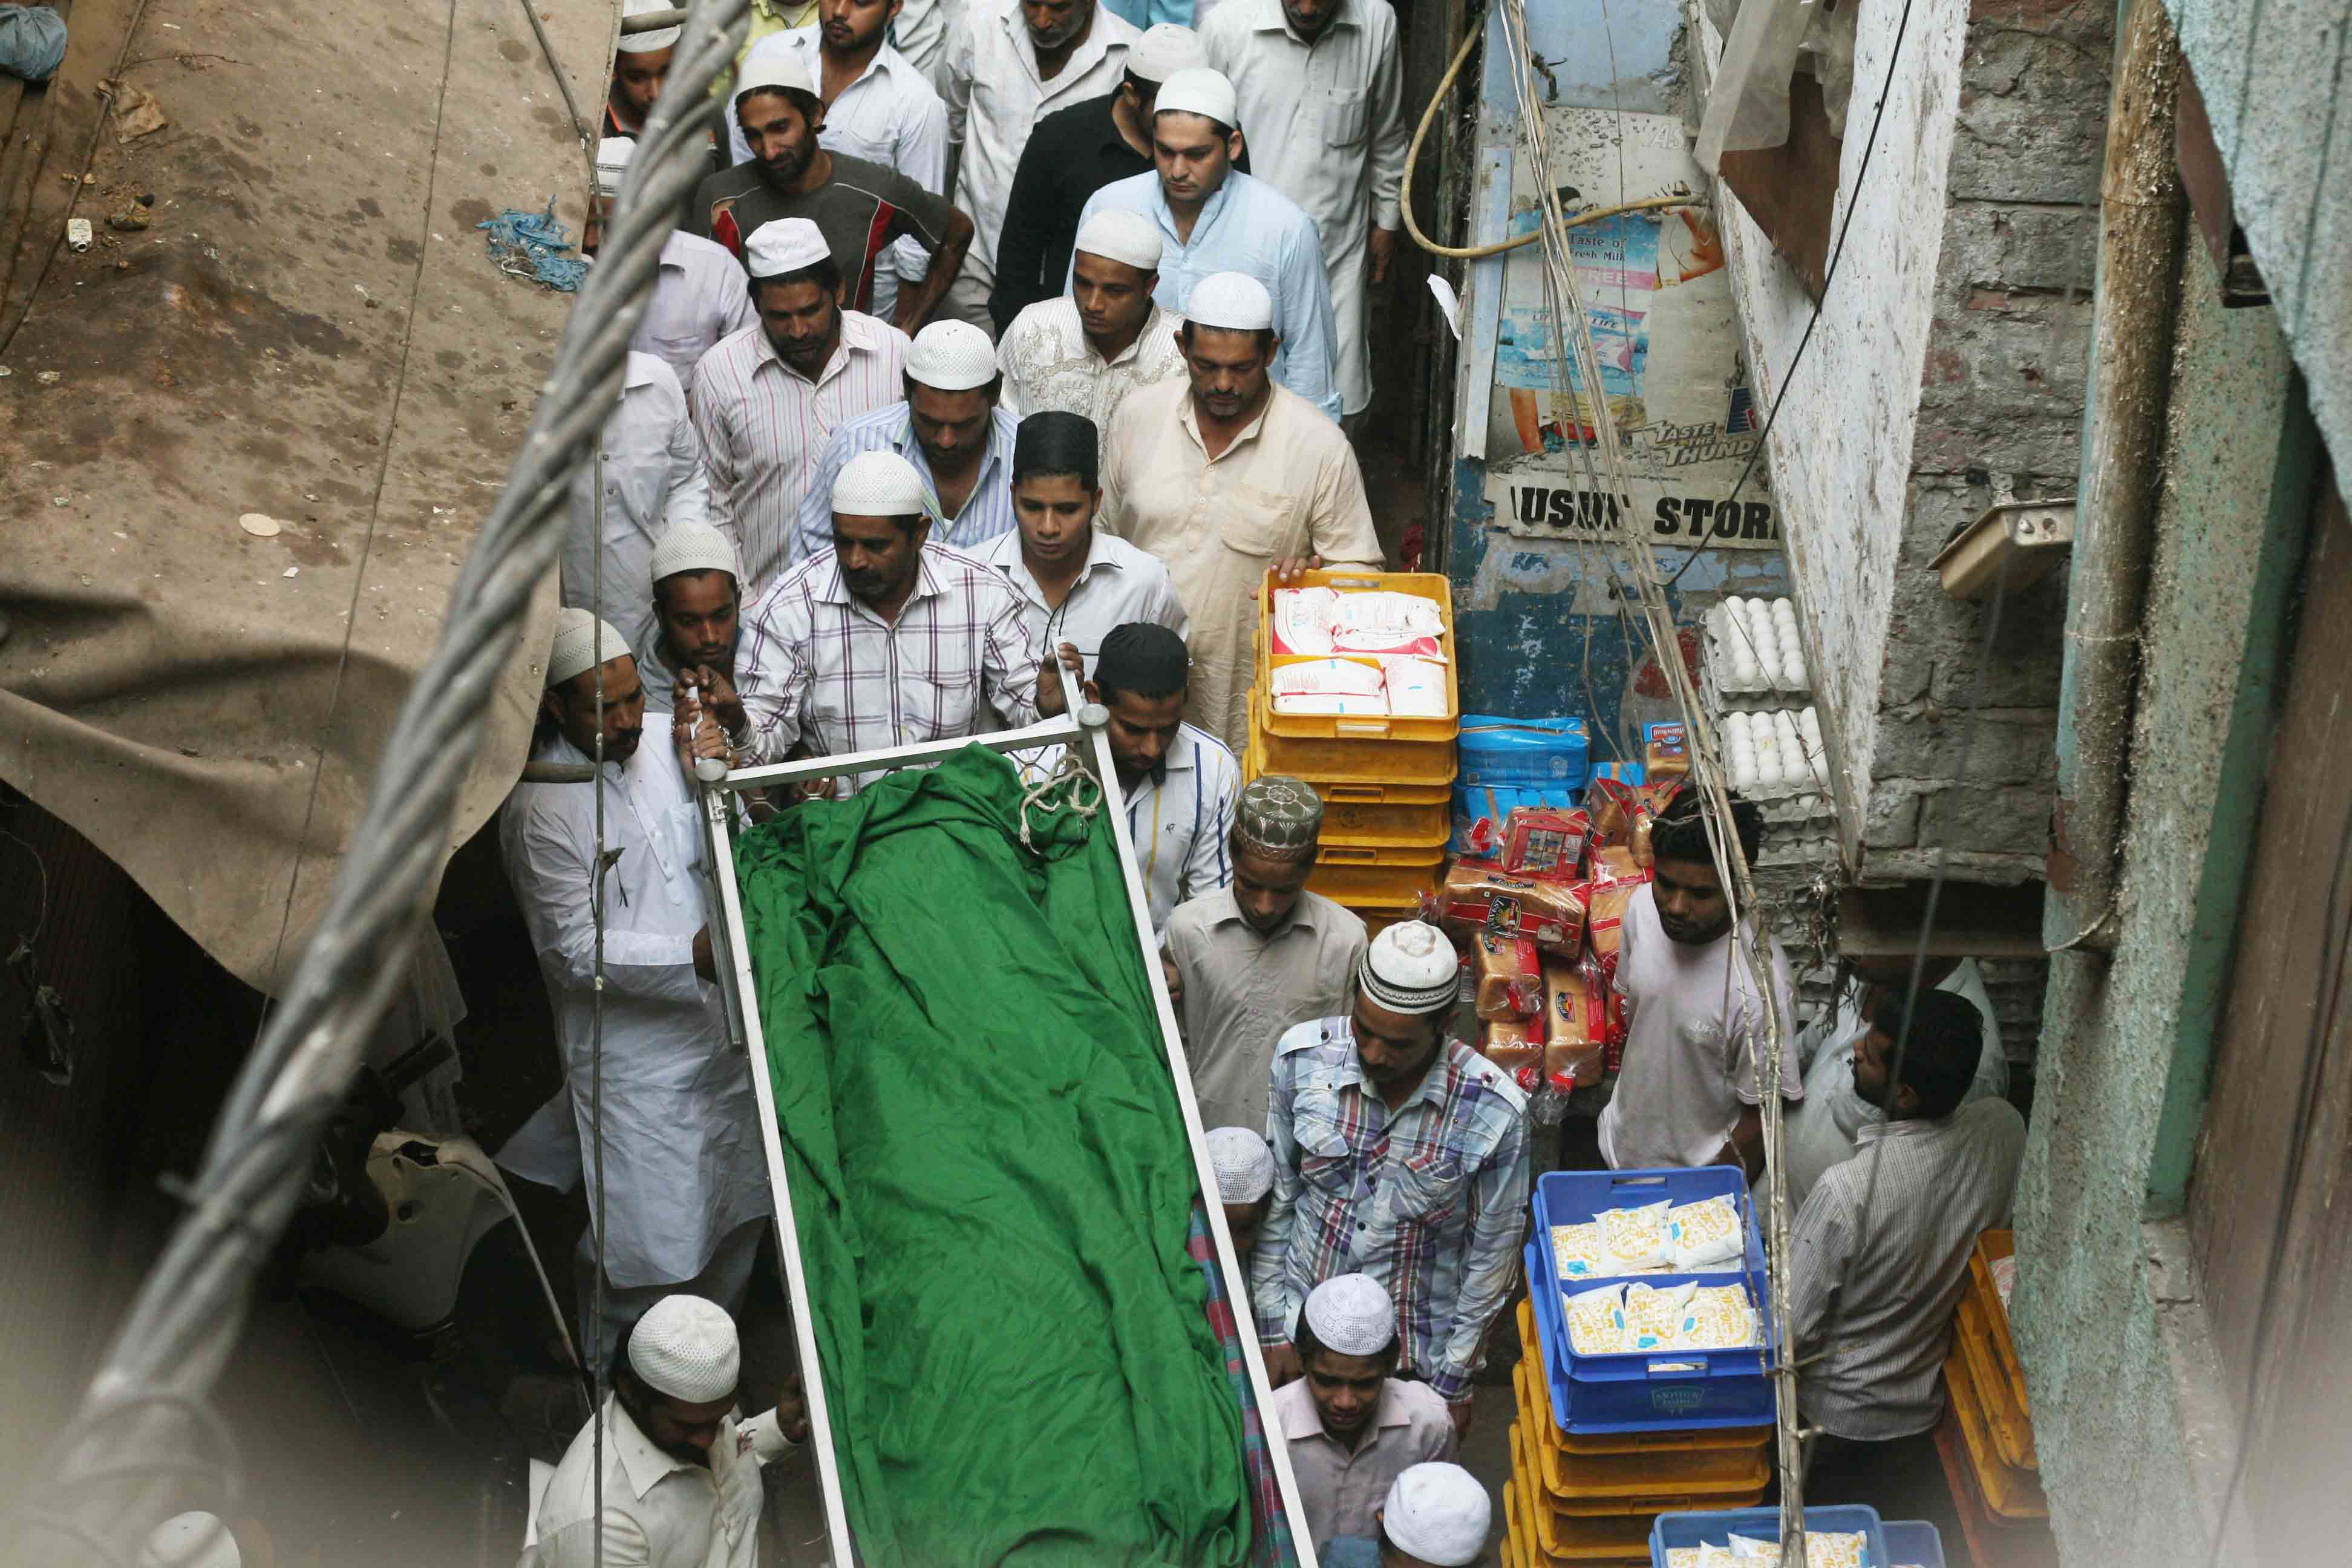 City Moment – Death of a Man, Pahari Gosht Wali